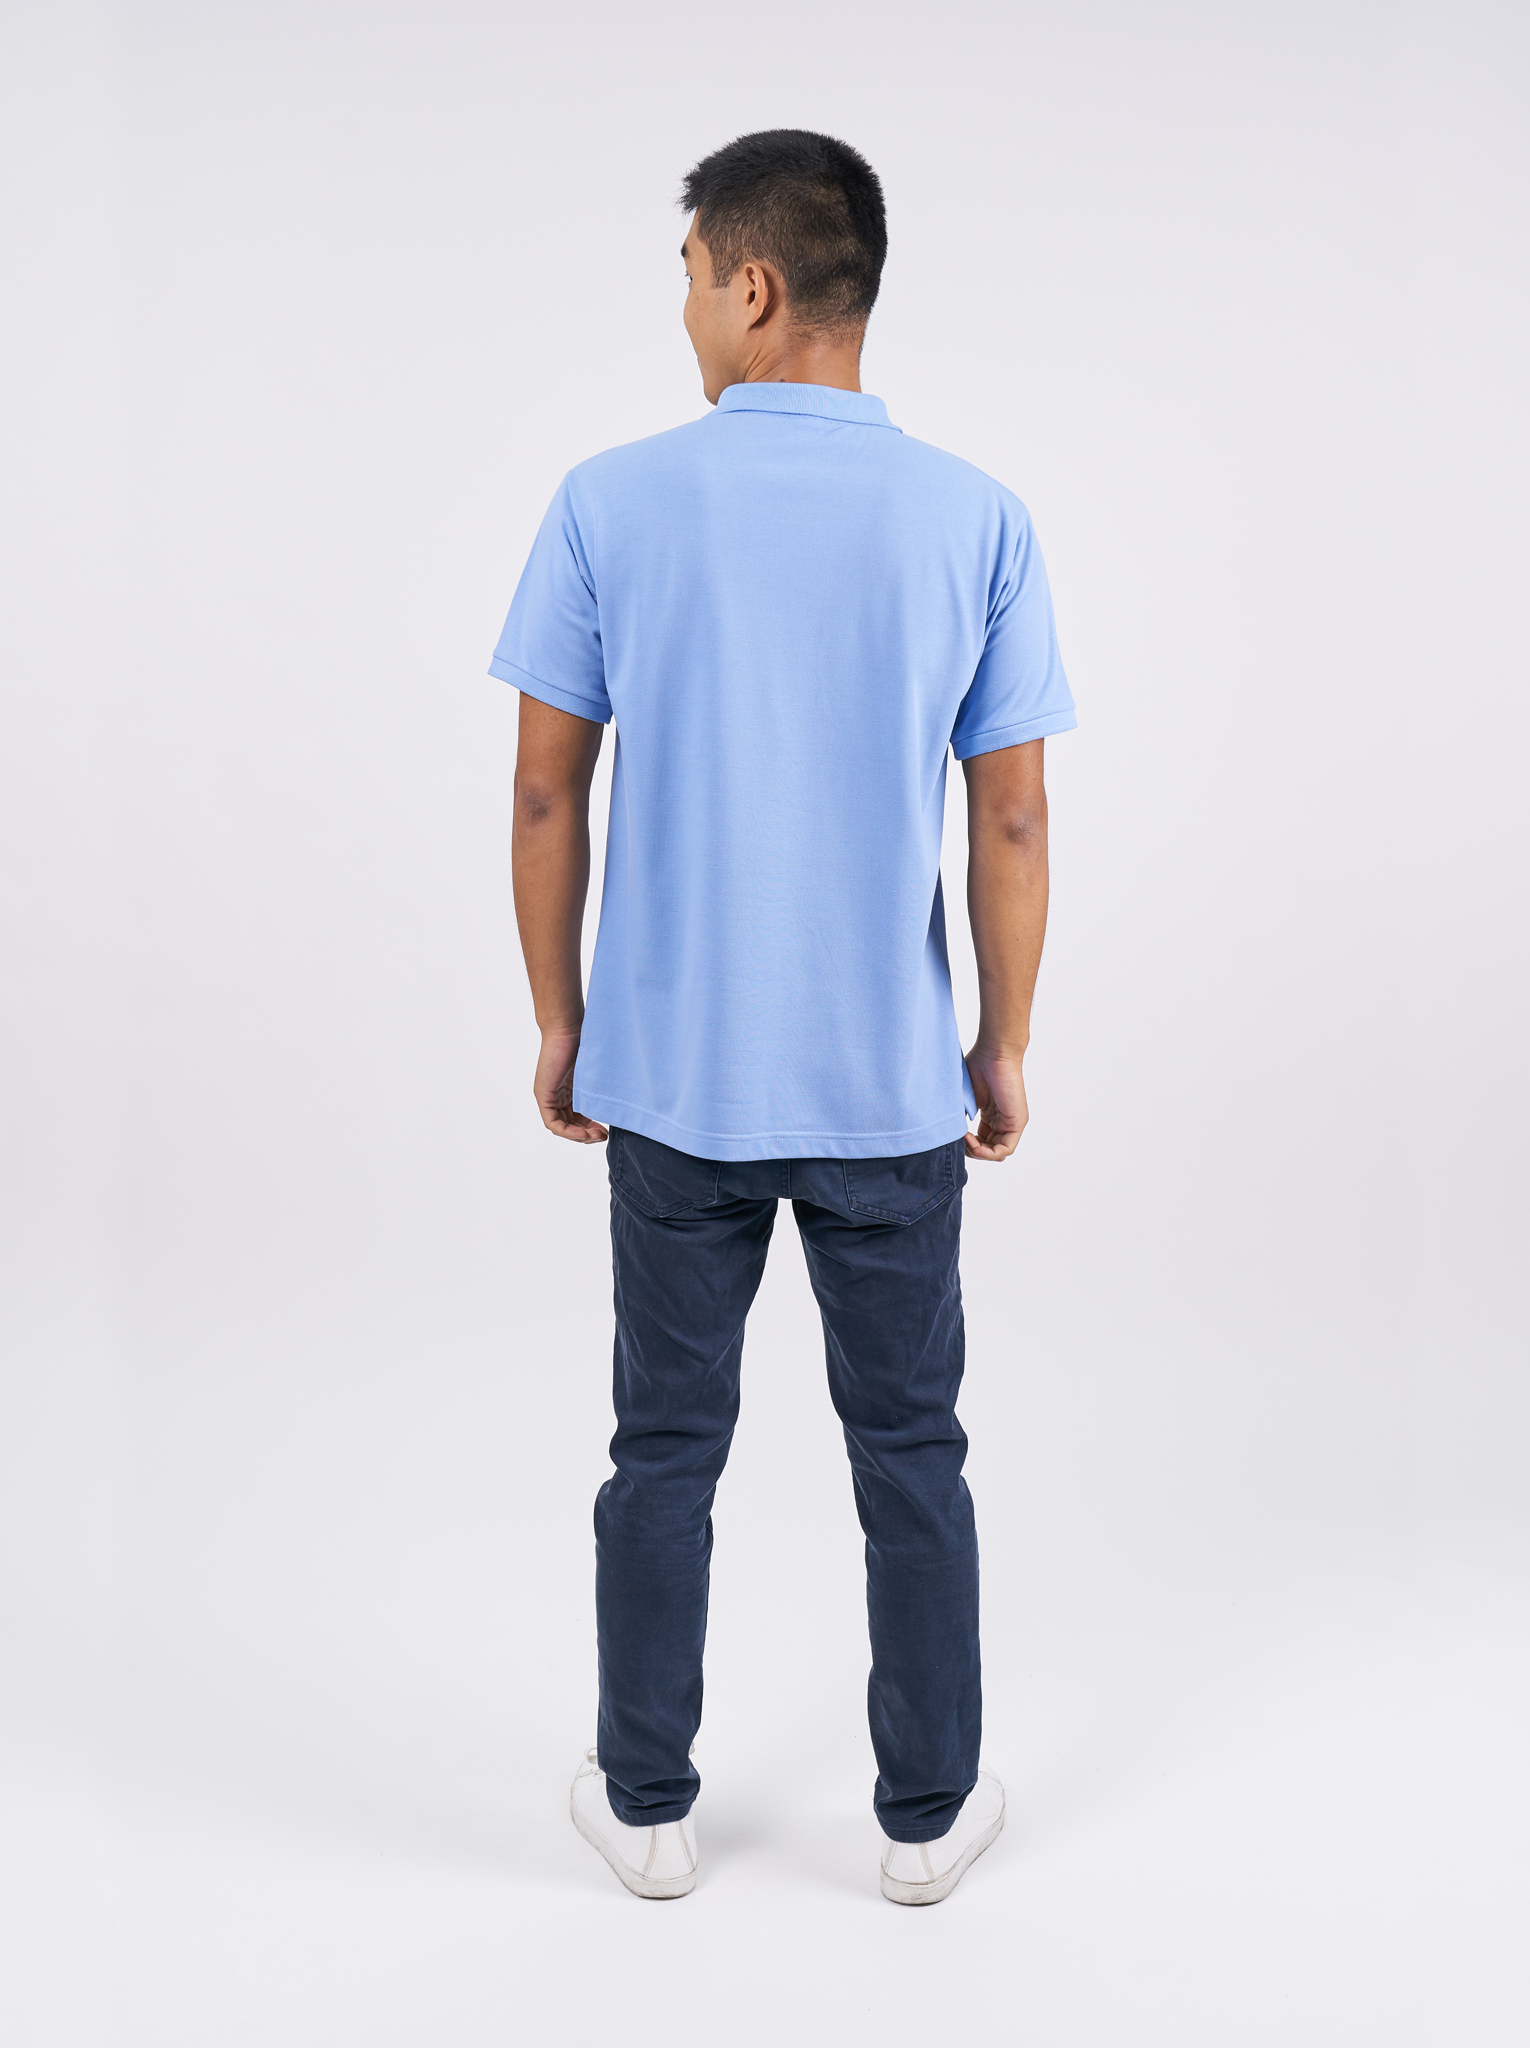 Polo Shirt เสื้อโปโล (Sky Blue, สีฟ้า)(Unisex)